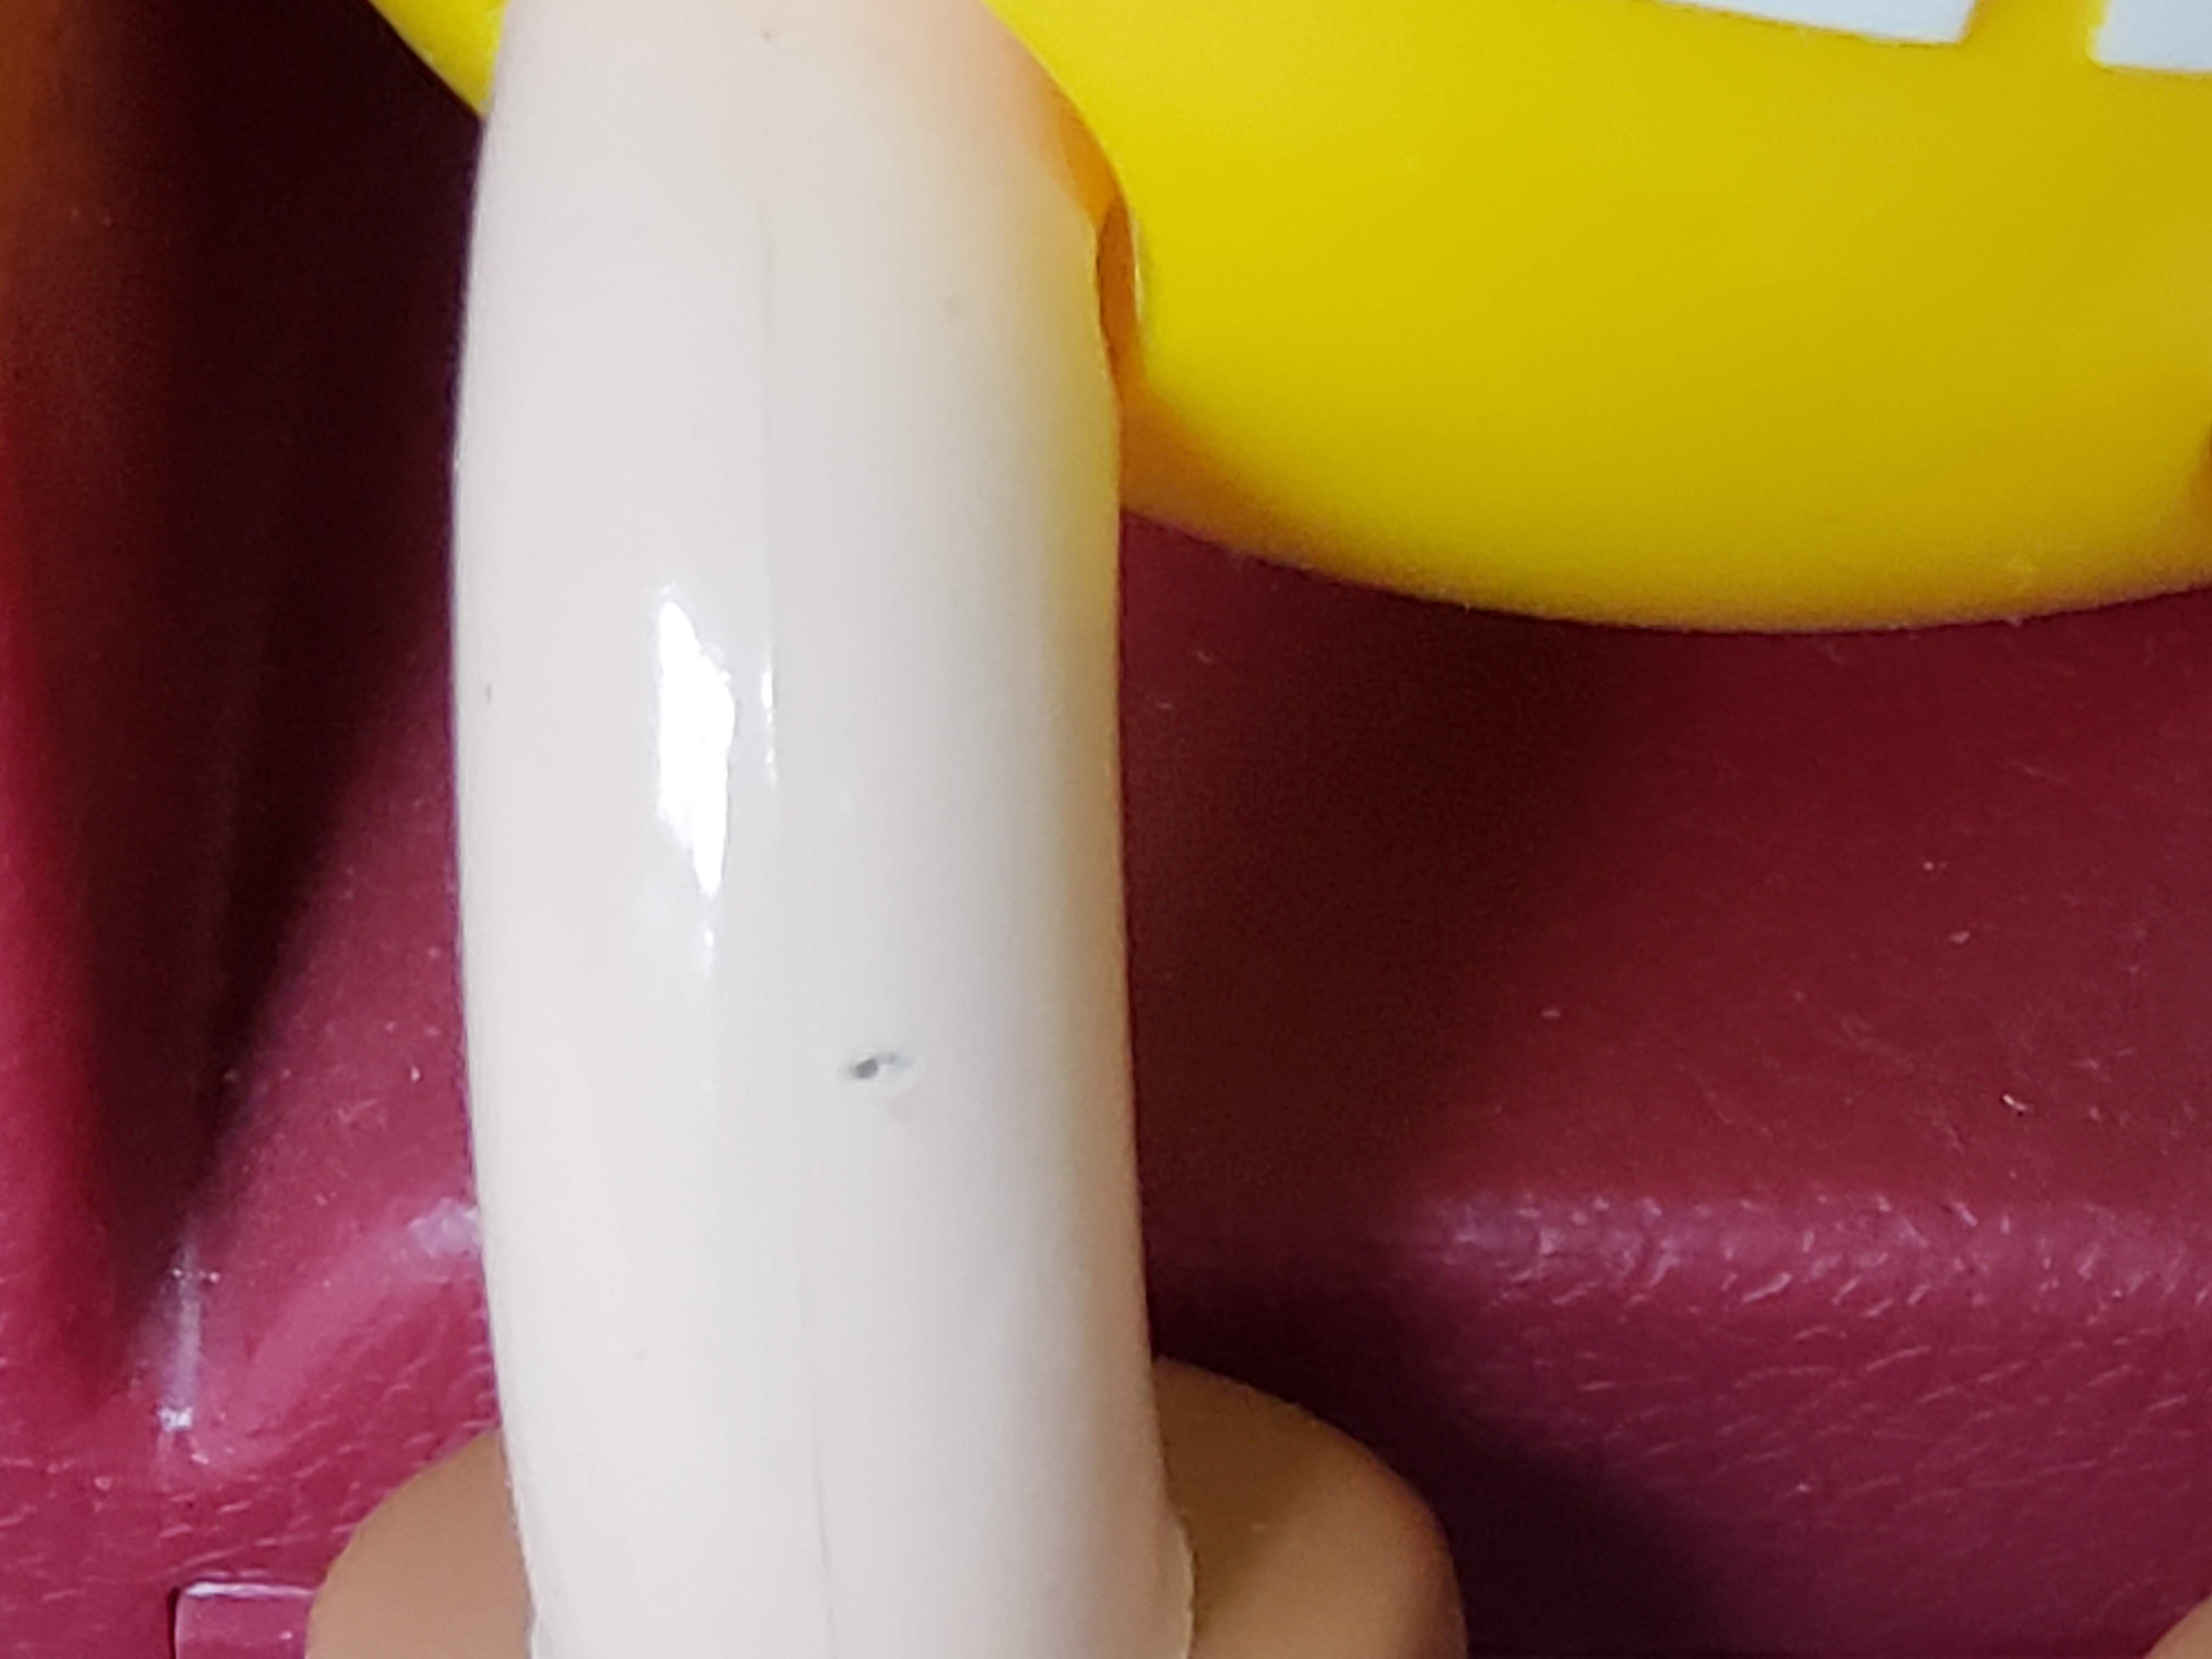 https://serstyle.com/wp-content/uploads/2018/09/Yellow-MM-La-Z-Boy-Candy-Dispenser-leg.jpg